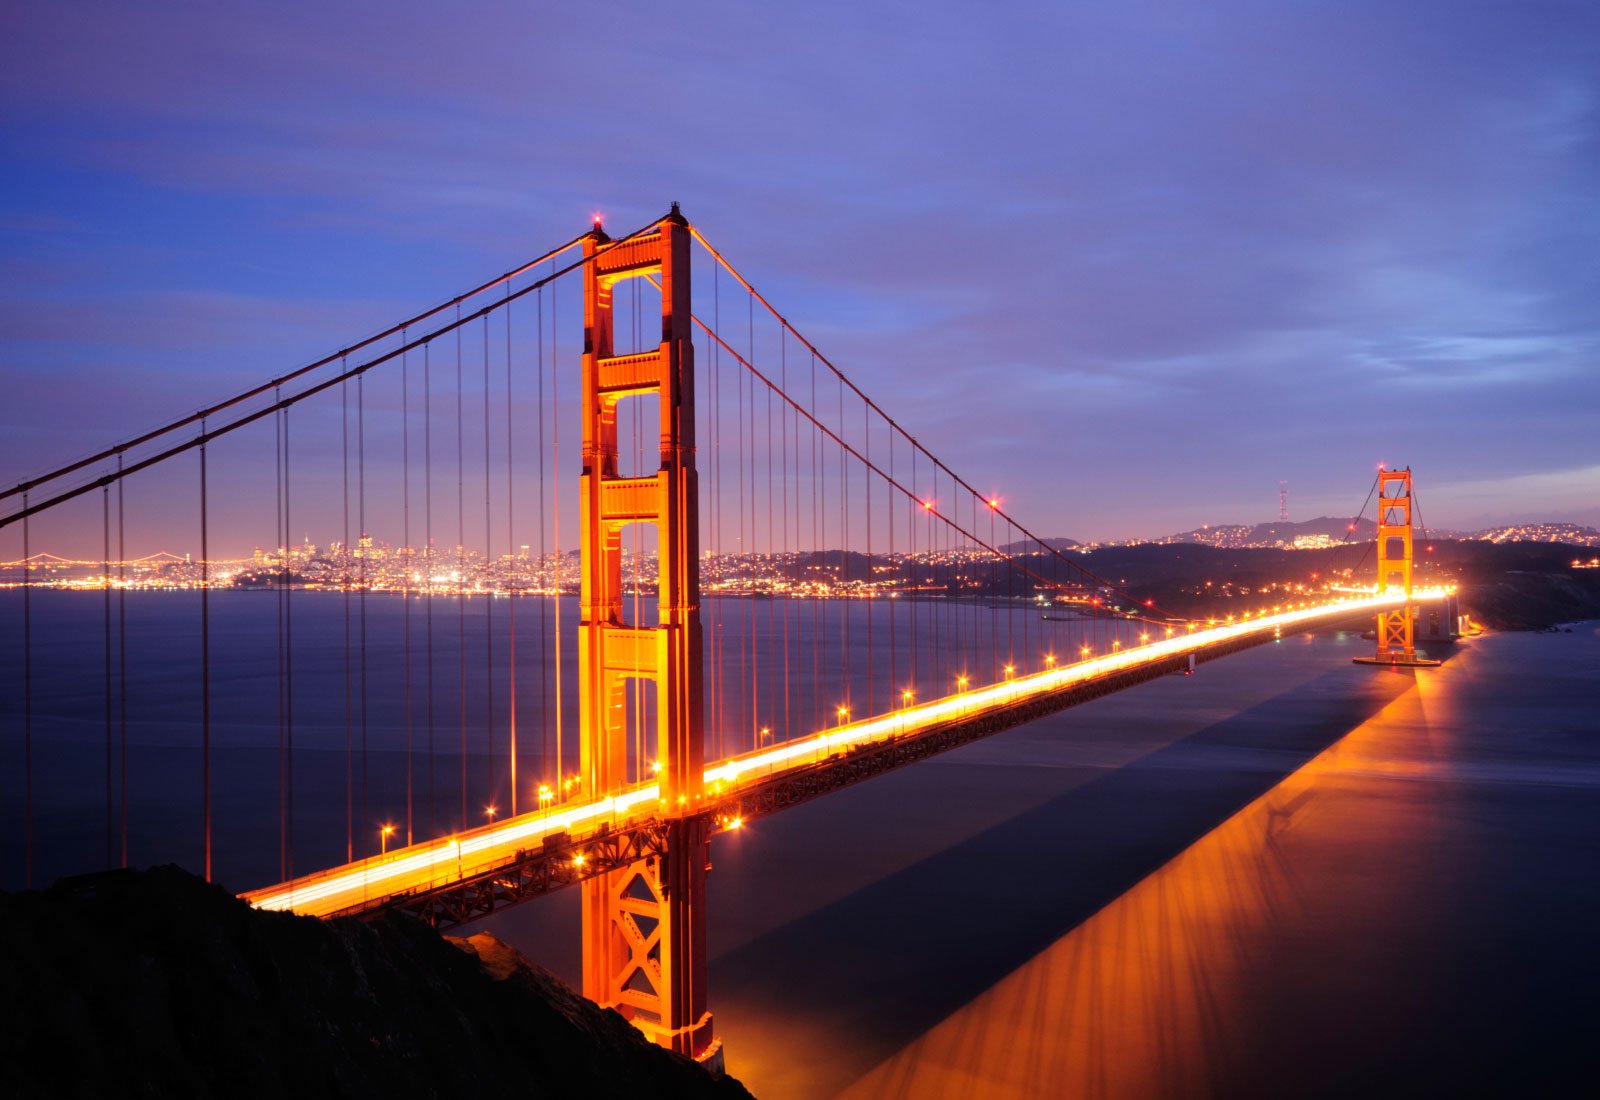 Golden Gate Bridge in San Francisco: Bike, Walk, Drive And Views